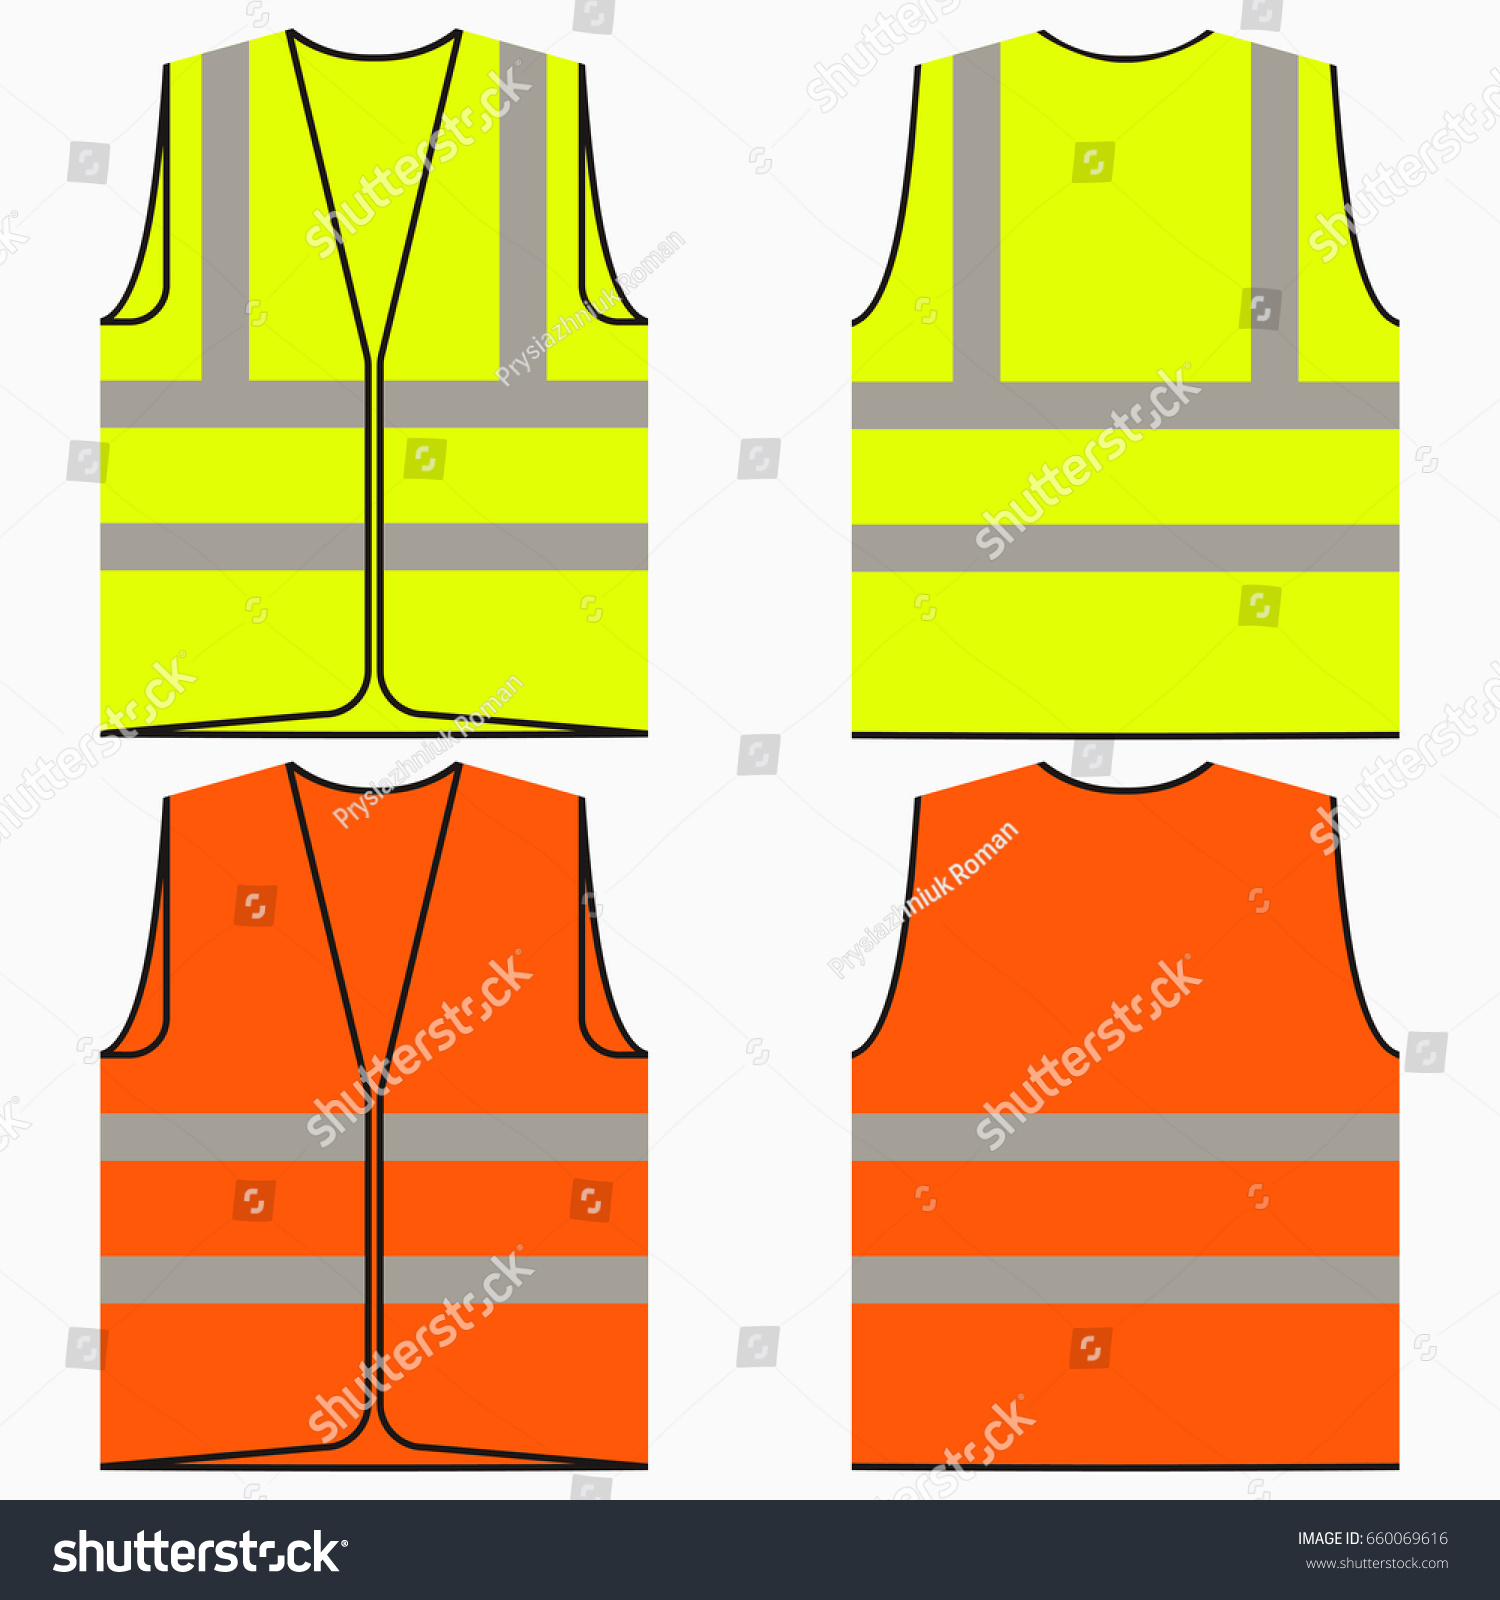 SVG of Safety vest. Set of yellow and orange work uniform with reflective stripes. Vector illustration. svg